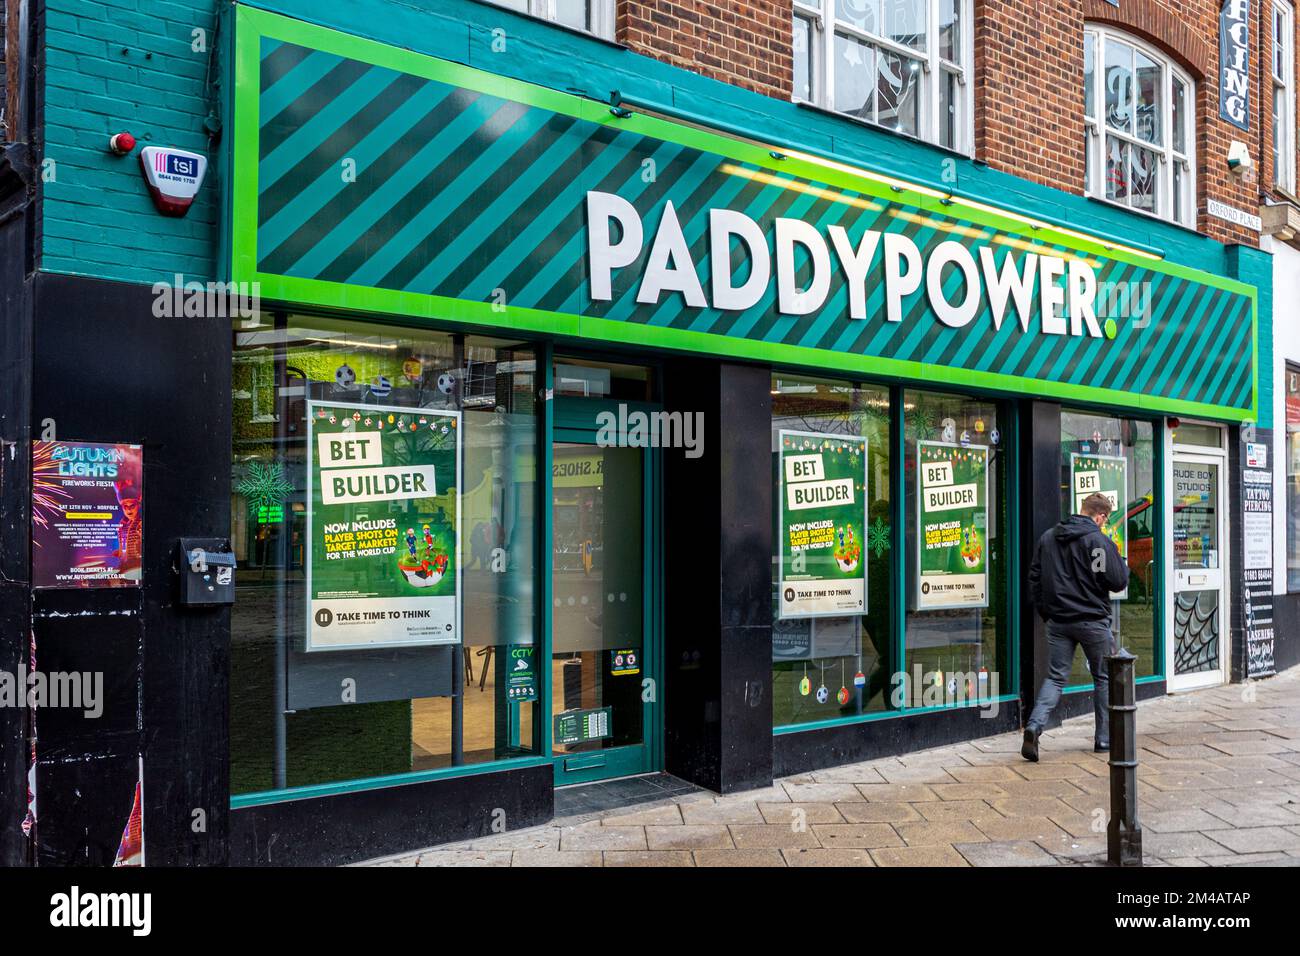 PaddyPower-lizenzierter Wettshop – Paddy Power Bookmakers Shop in Peterborough UK. Paddy Power wurde 1988 in Dublin gegründet. Stockfoto